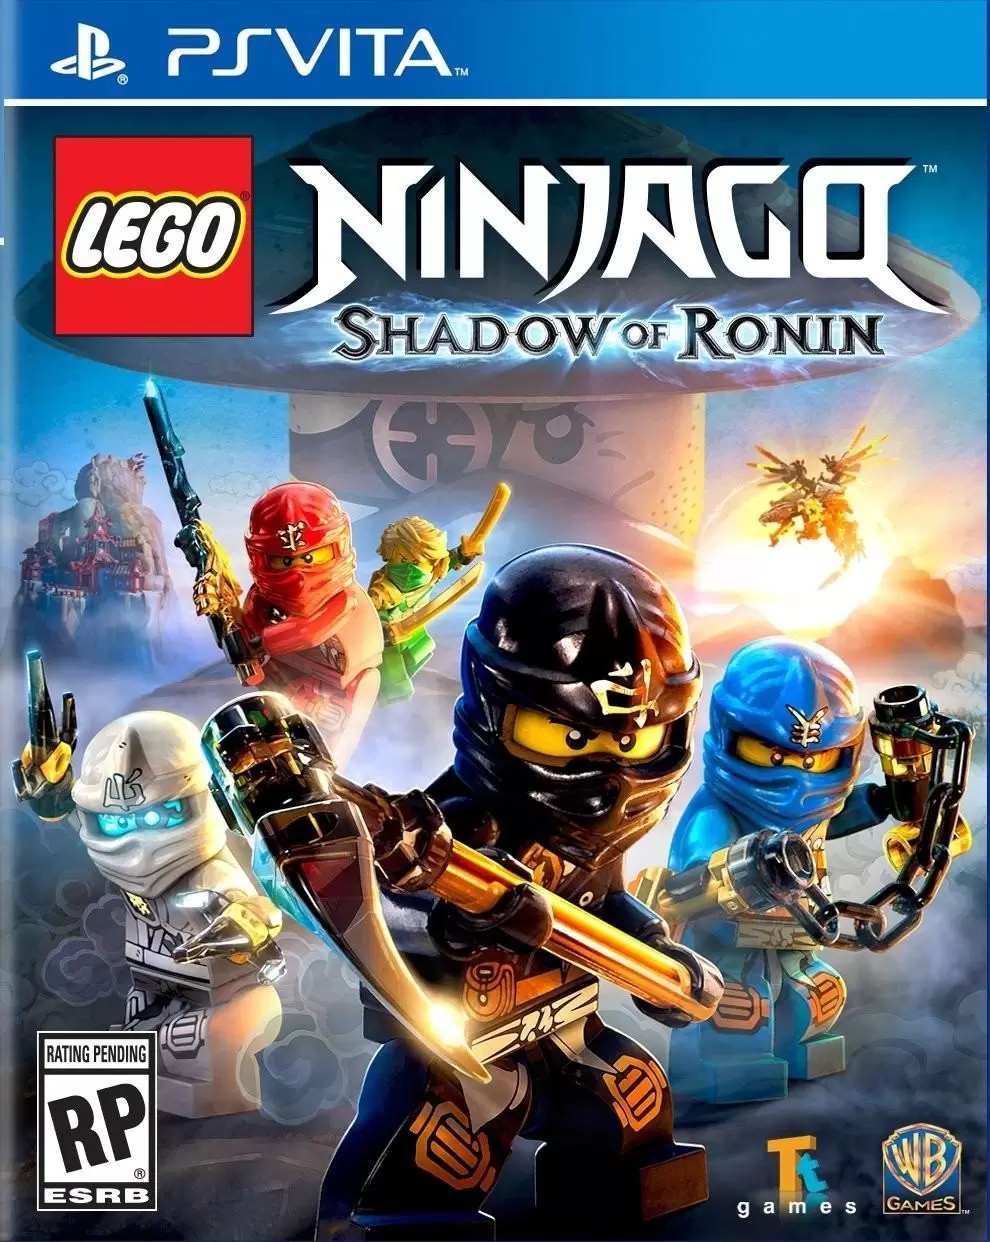 Jeux PS VITA - LEGO Ninjago: Shadow of Ronin